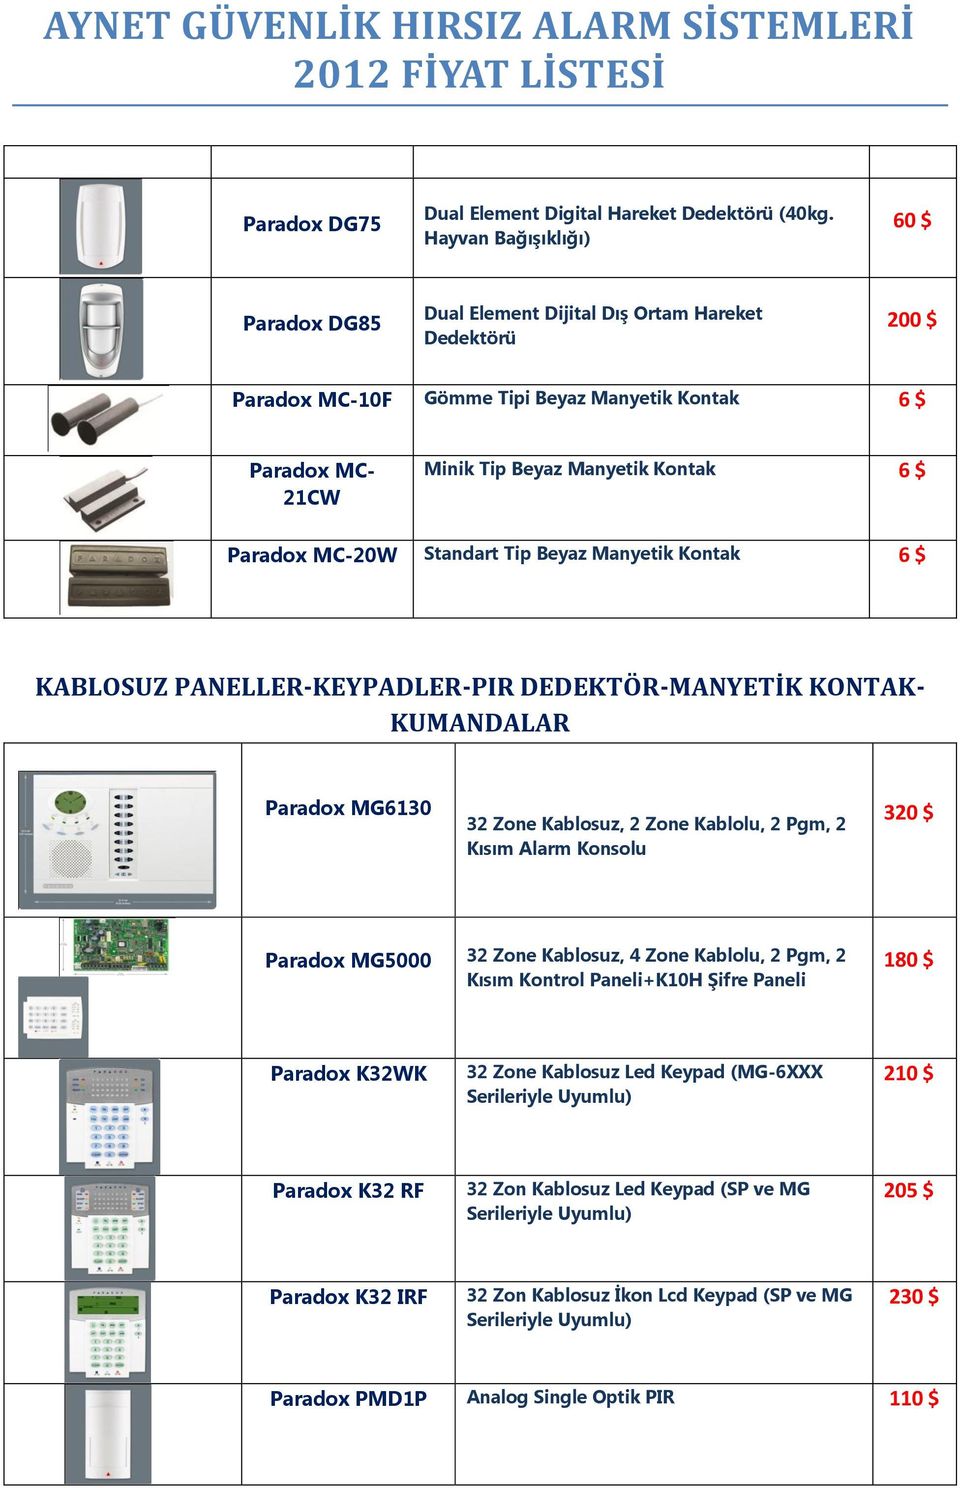 Paradox MC-20W Standart Tip Beyaz Manyetik Kontak 6 $ KABLOSUZ PANELLER-KEYPADLER-PIR DEDEKTÖR-MANYETİK KONTAK- KUMANDALAR Paradox MG6130 32 Zone Kablosuz, 2 Zone Kablolu, 2 Pgm, 2 Kısım Alarm